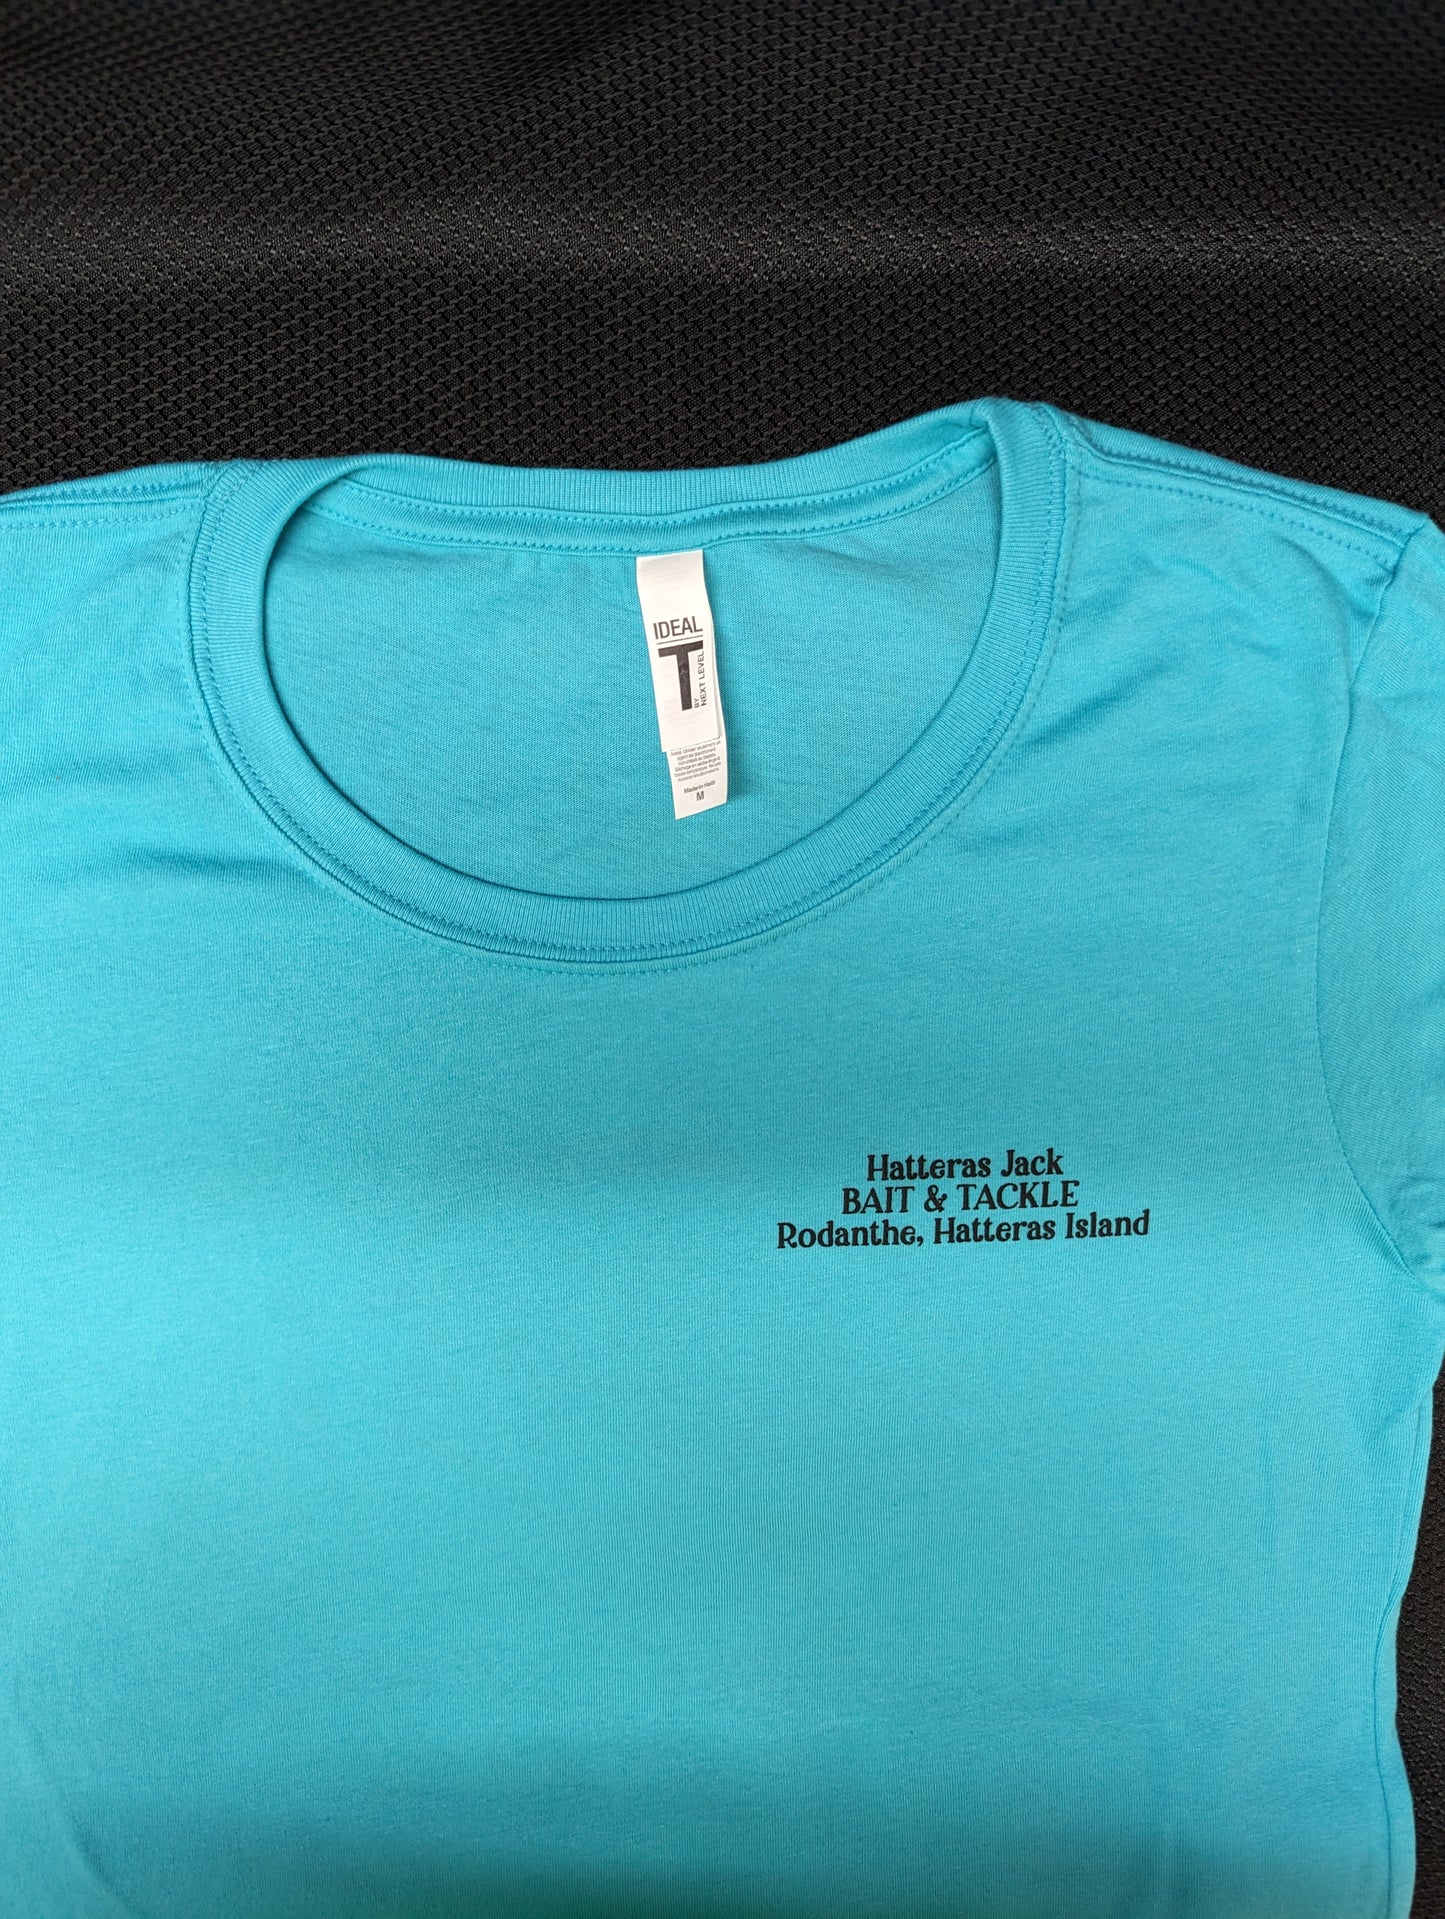 Hatteras Jack T-shirt Dolphin Logo Woman's Cut